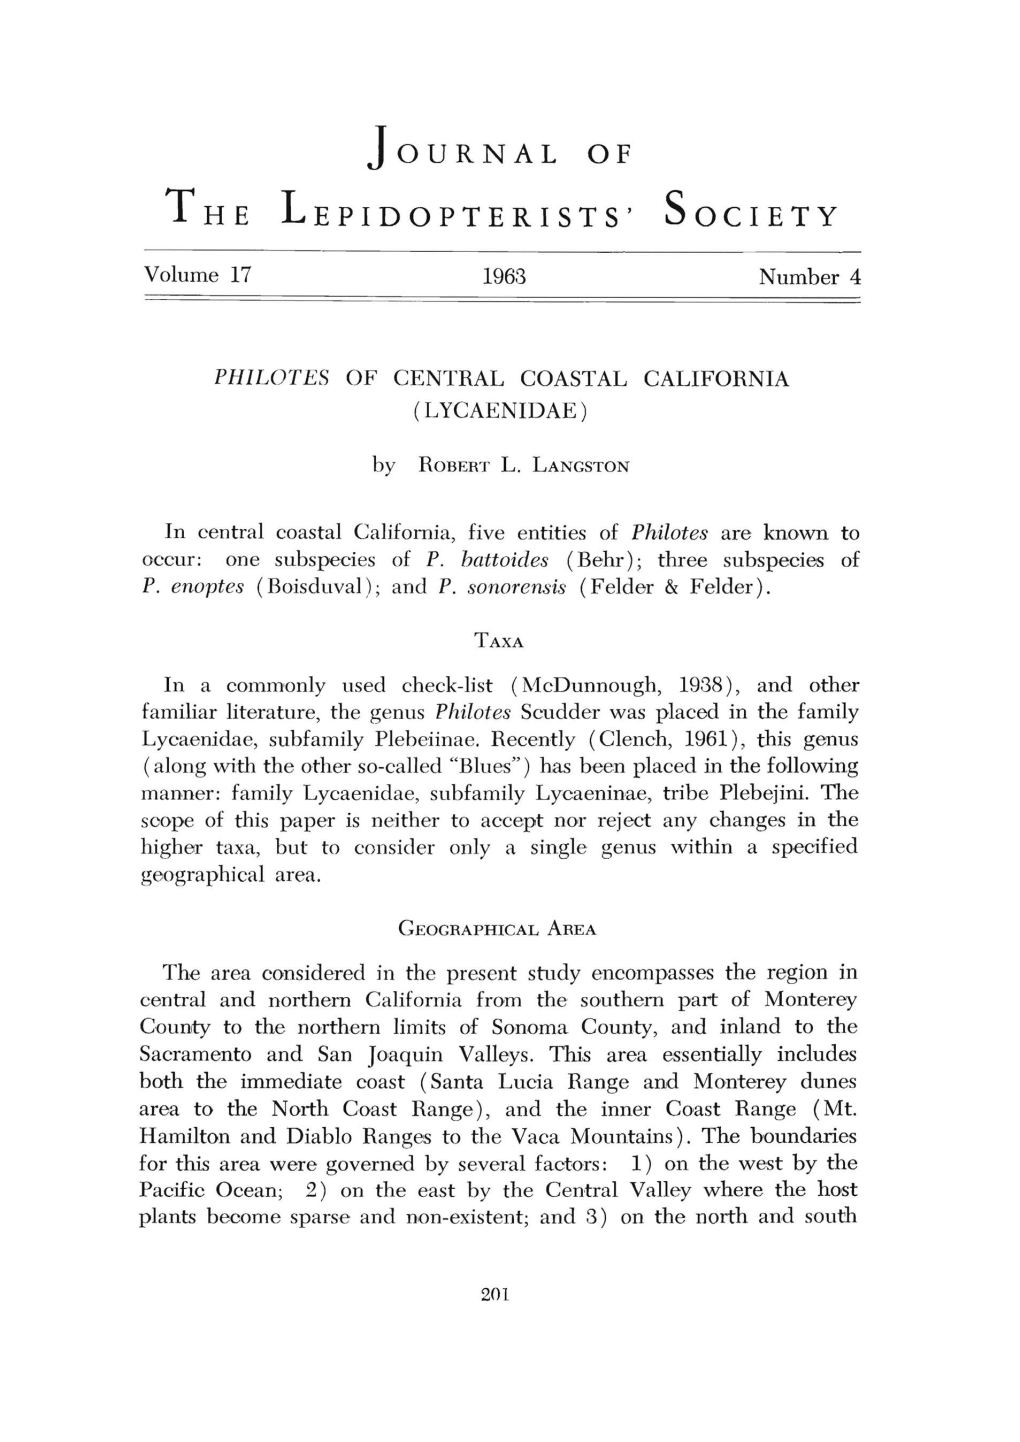 Philotes of Central Coastal California